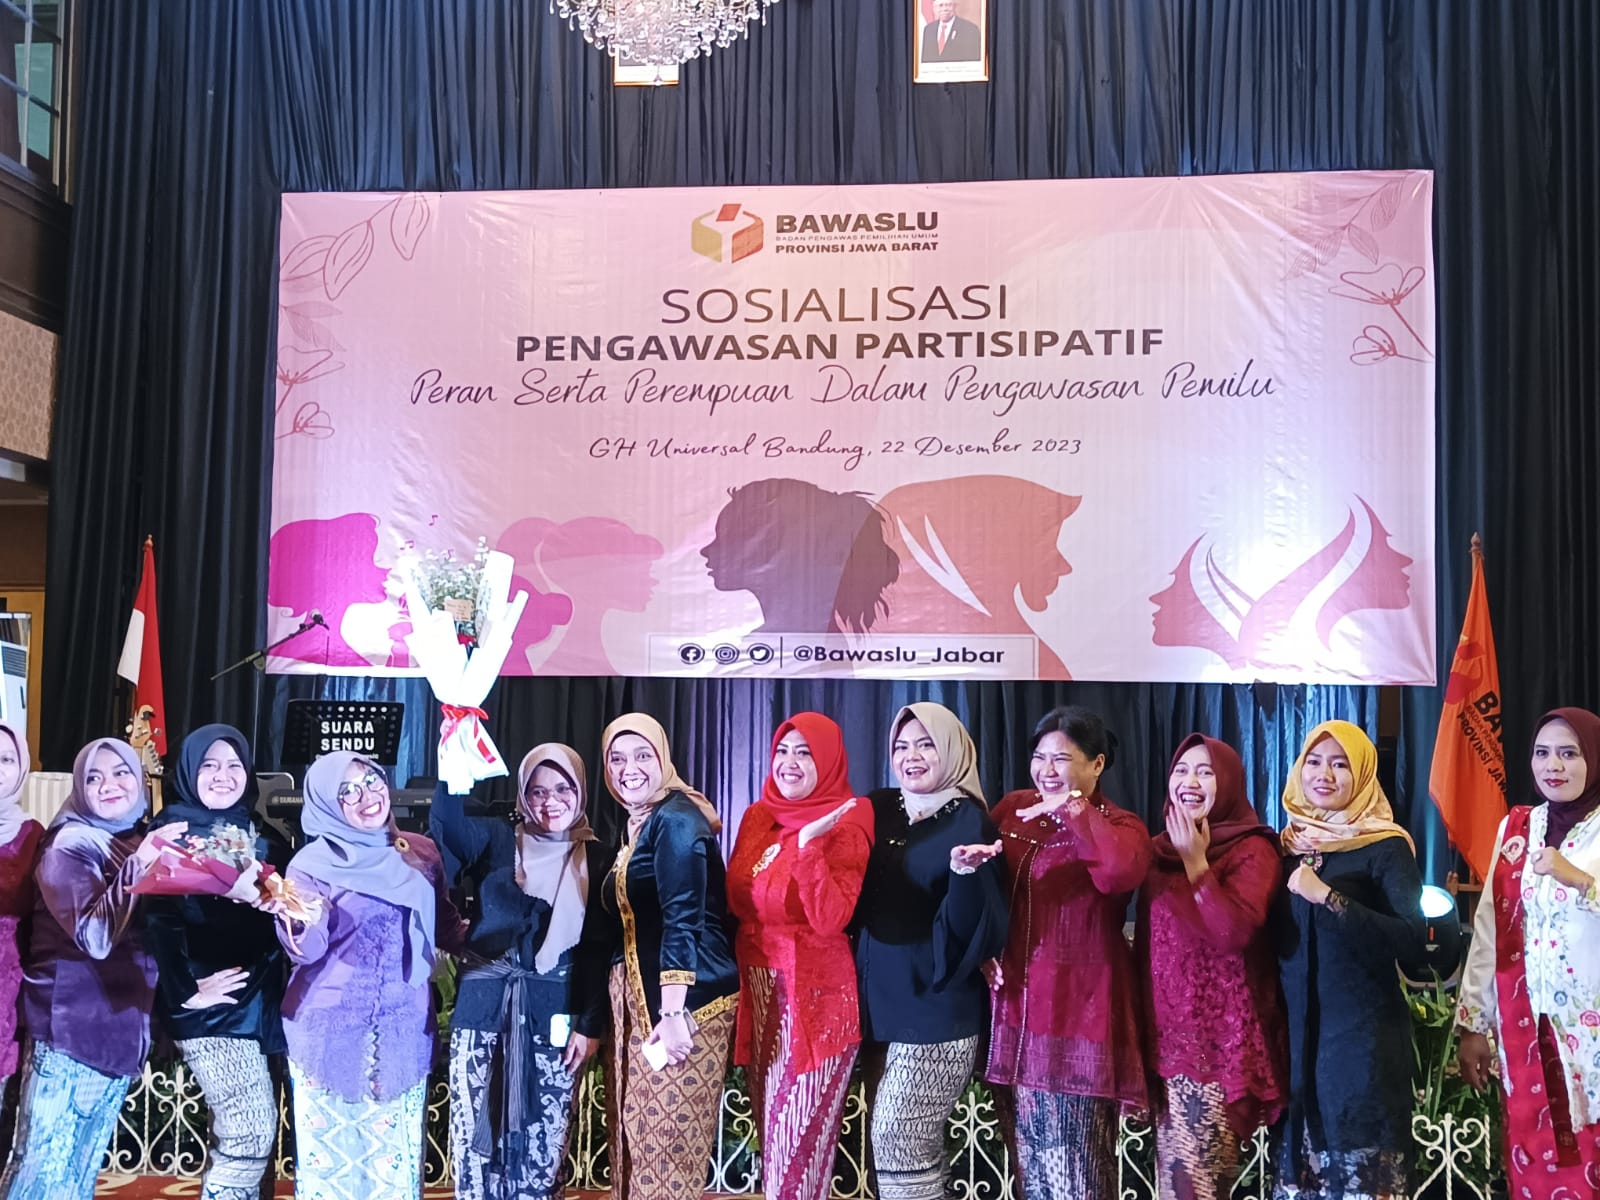 Gelar Sosialisasi Pengawasan Partisipatif di Bandung, Bawaslu Sebut Pentingnya Peran Perempuan dalam Pengawasan Pemilu